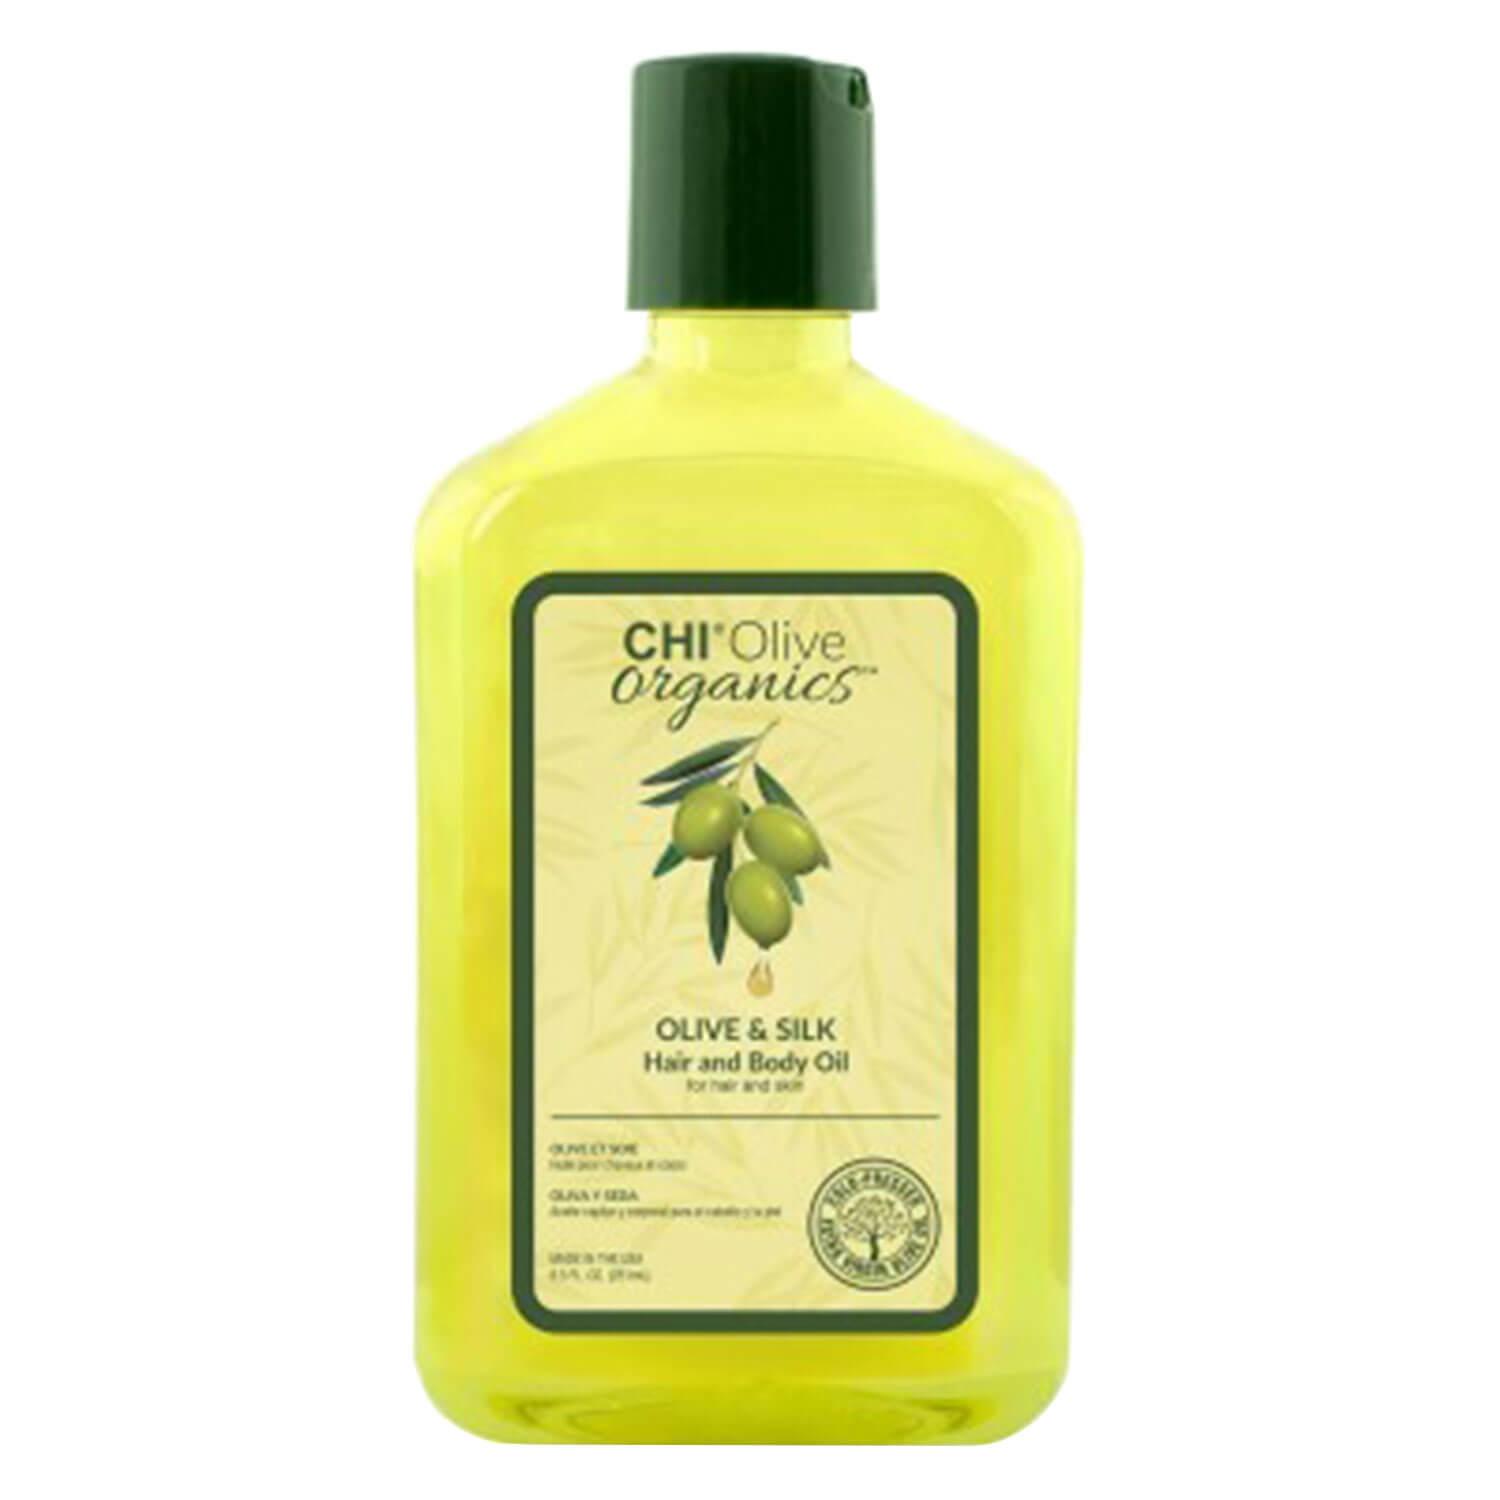 CHI Olive Organics - Hair & Body Oil